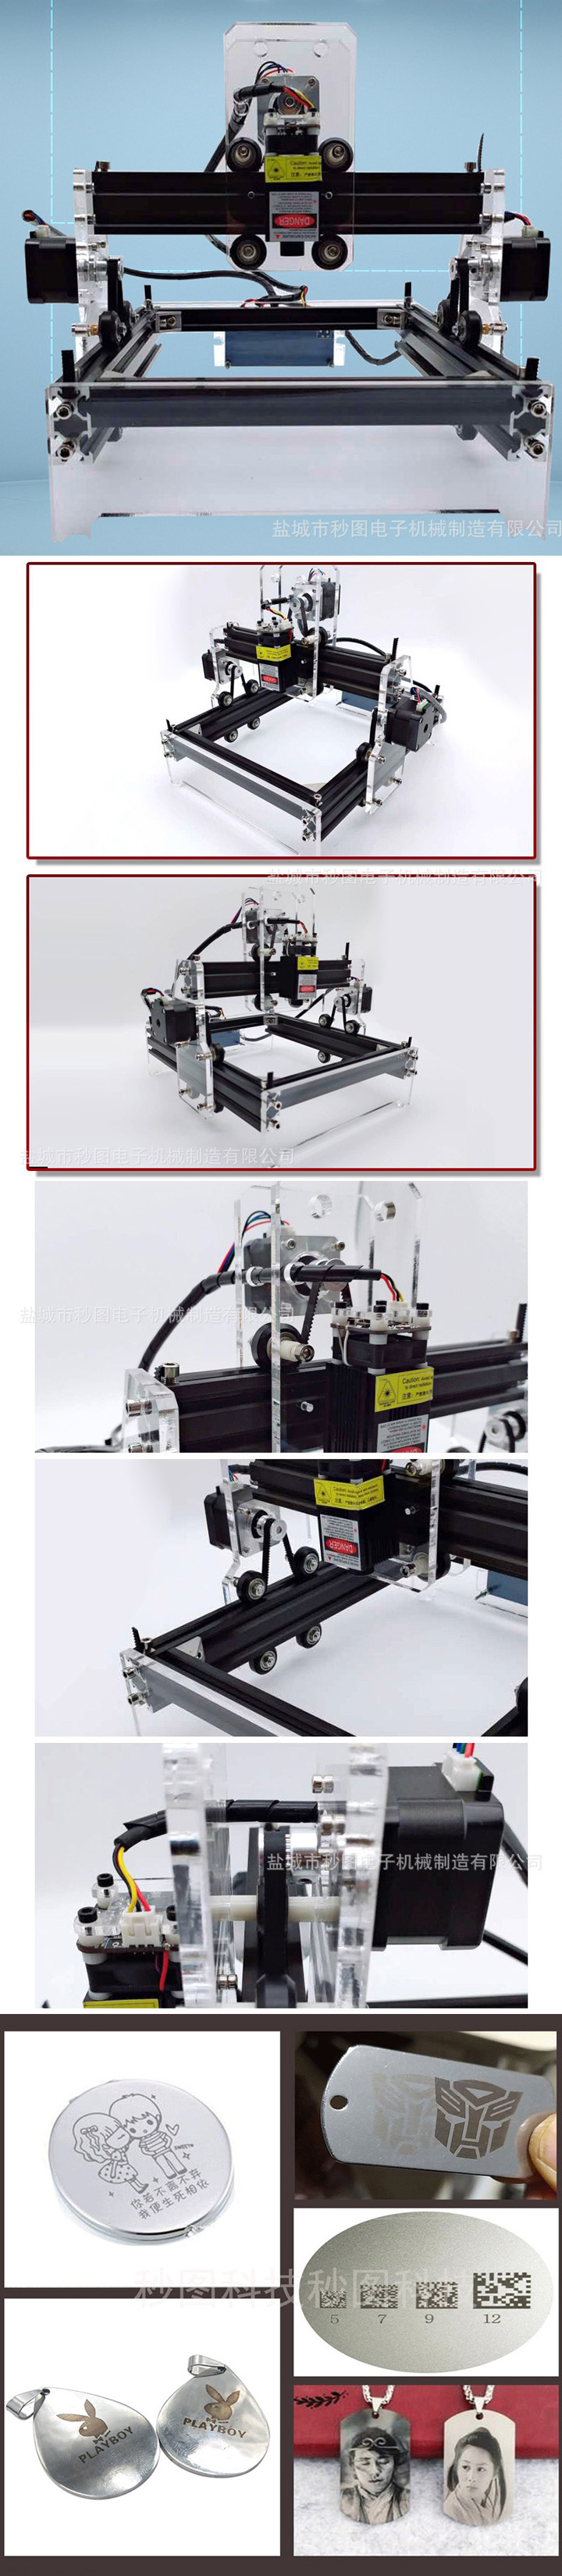 Laser CNC-Graveermachine